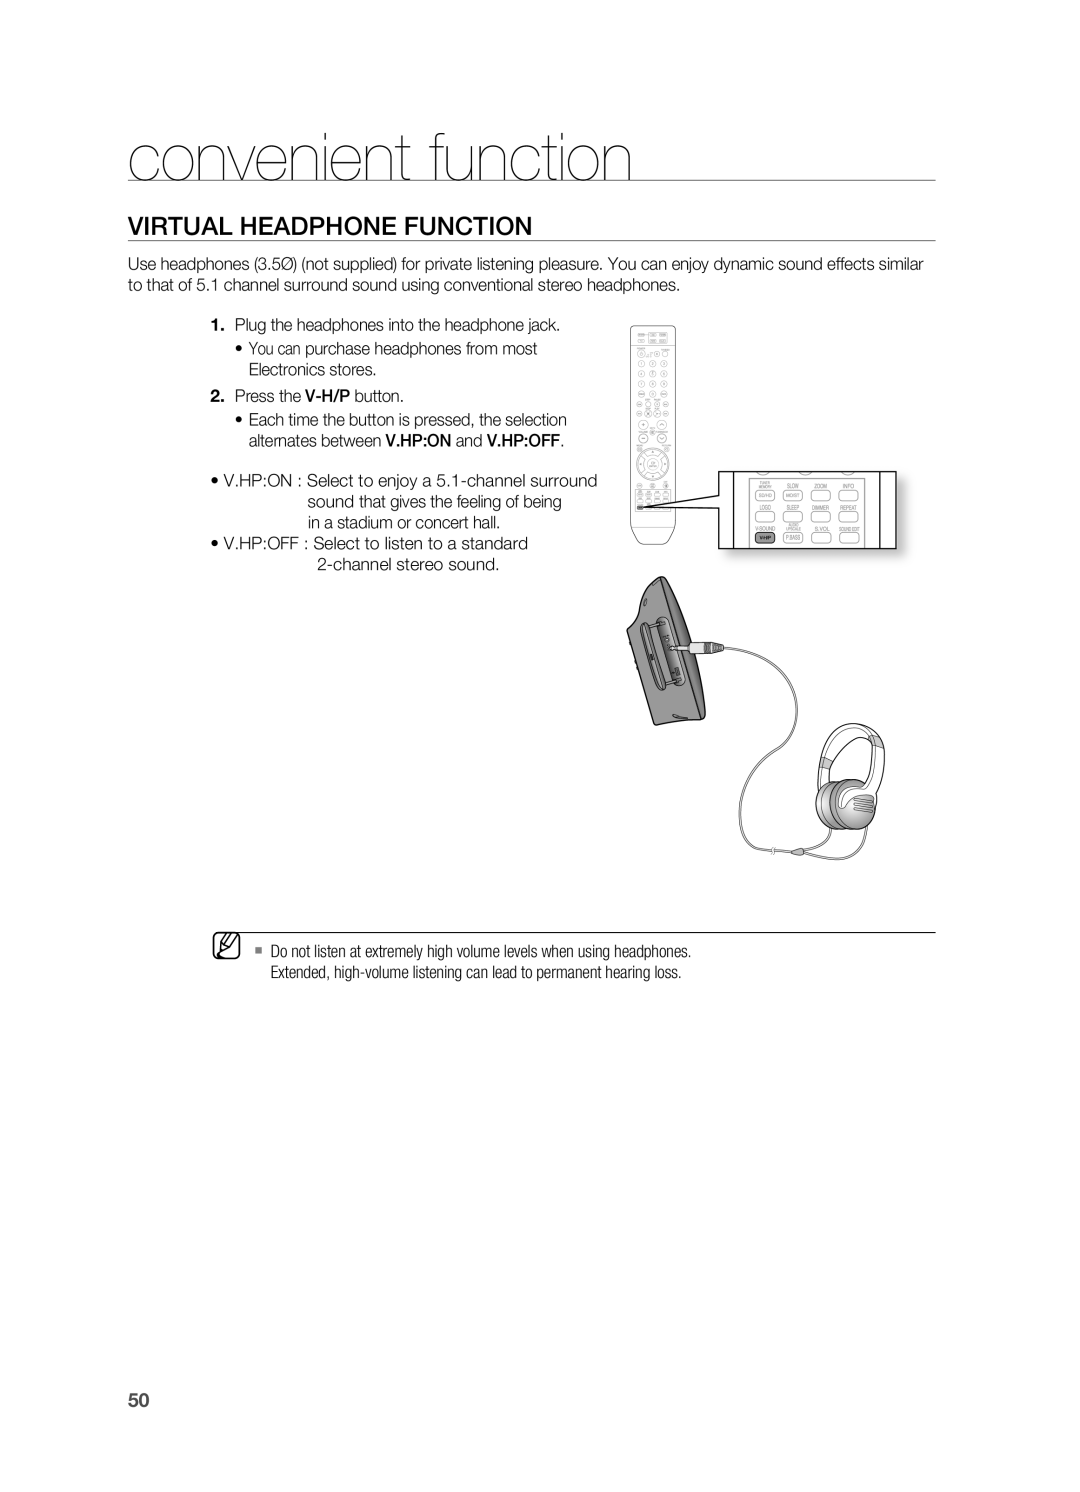 Samsung HT-X710 user manual VIrTUAl HEADPHONE FUNCTION, convenient function 